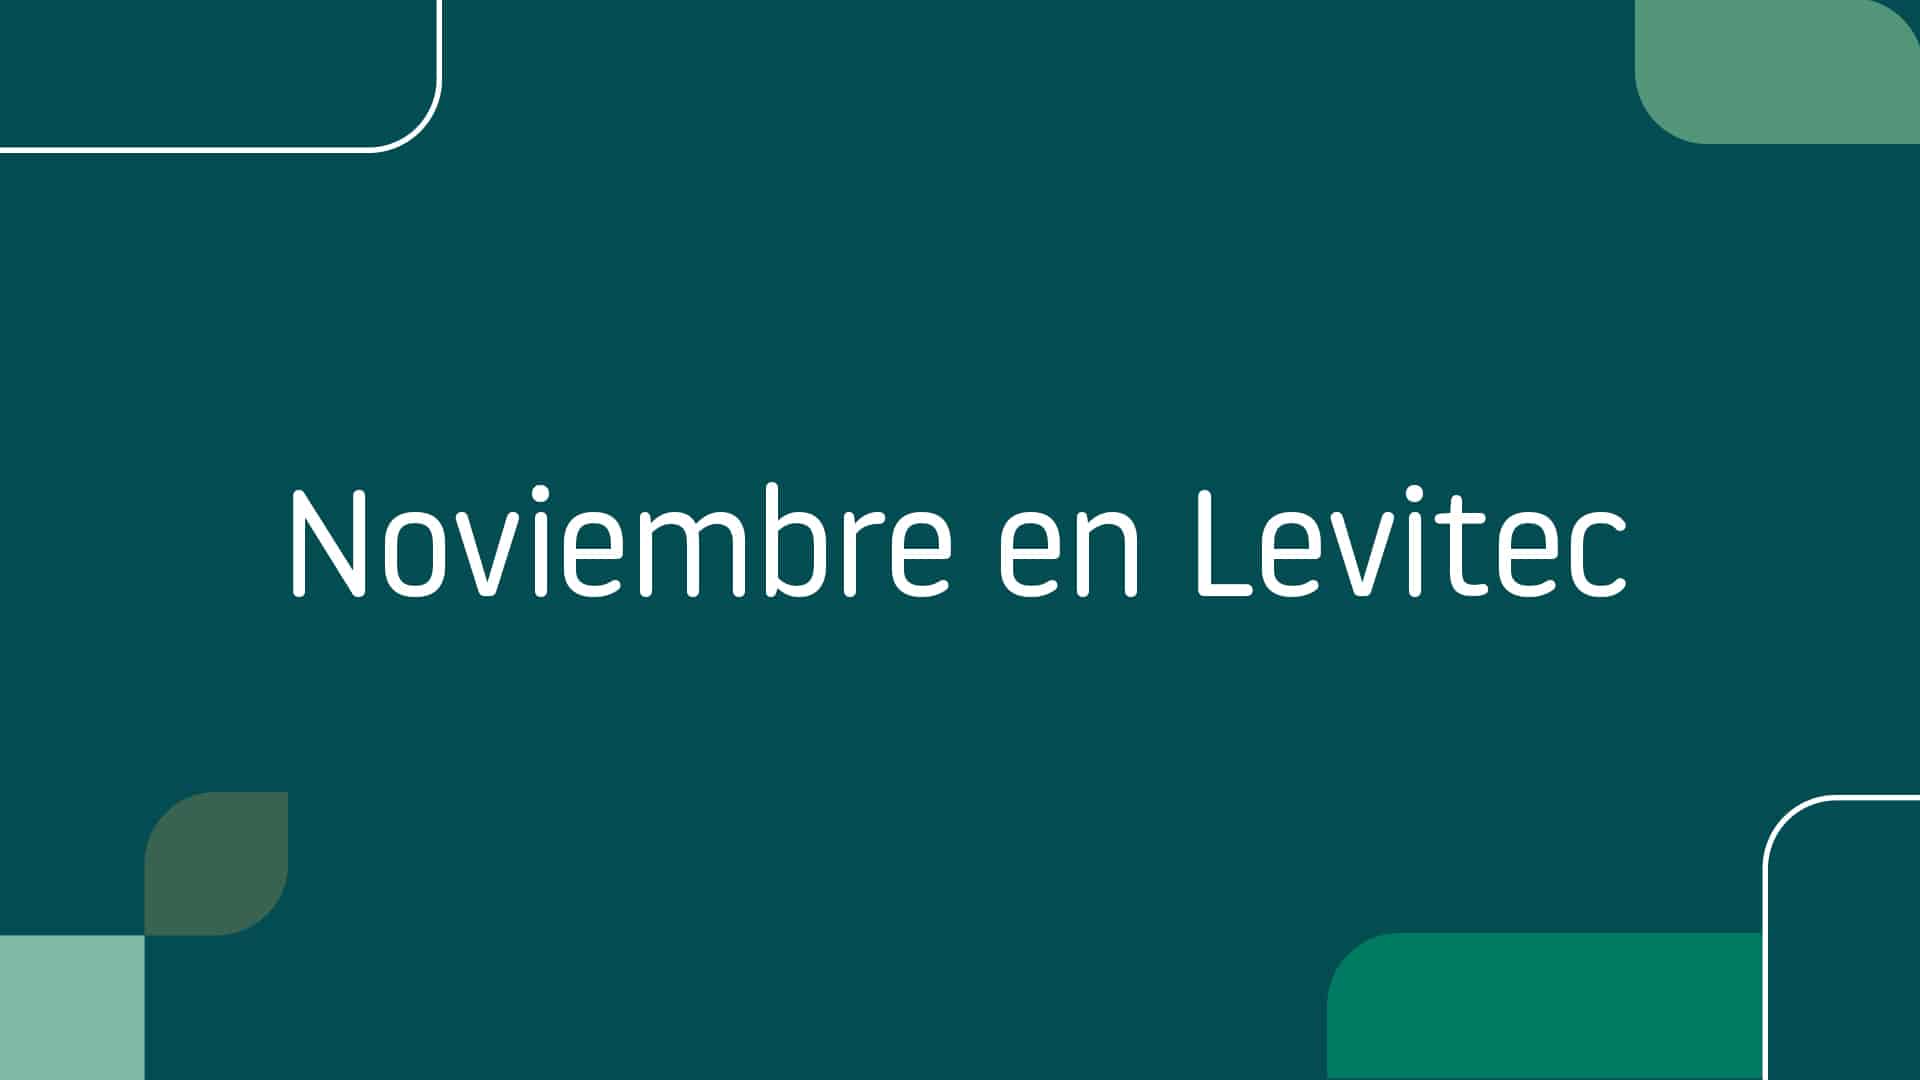 Noviembre en Levitec